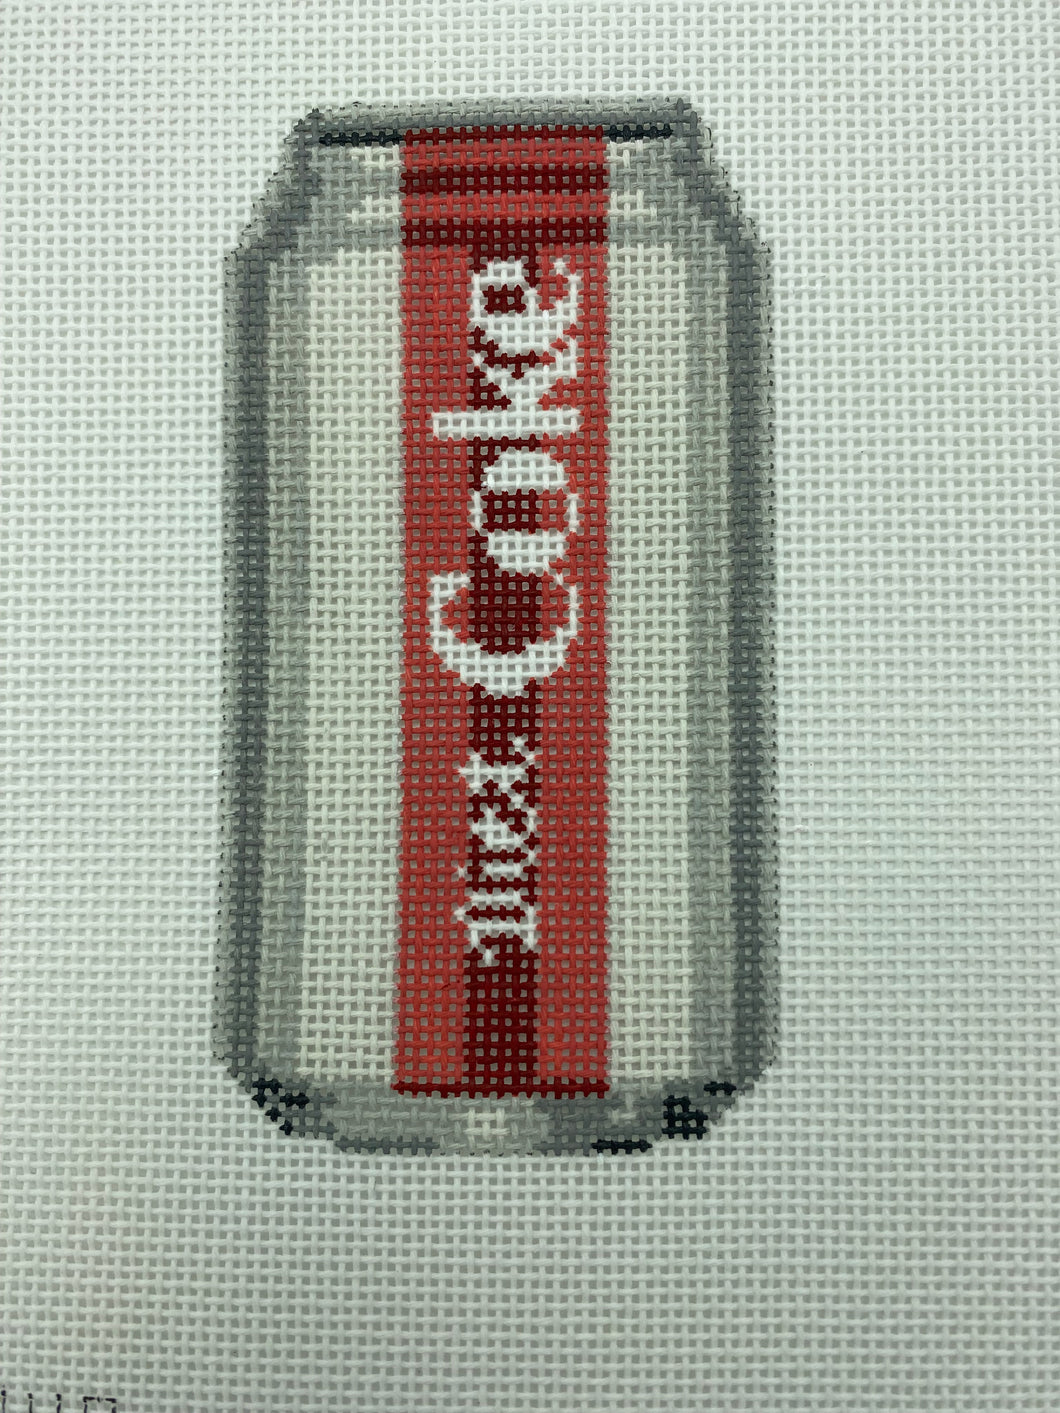 Diet Coke Needlepoint Ornament